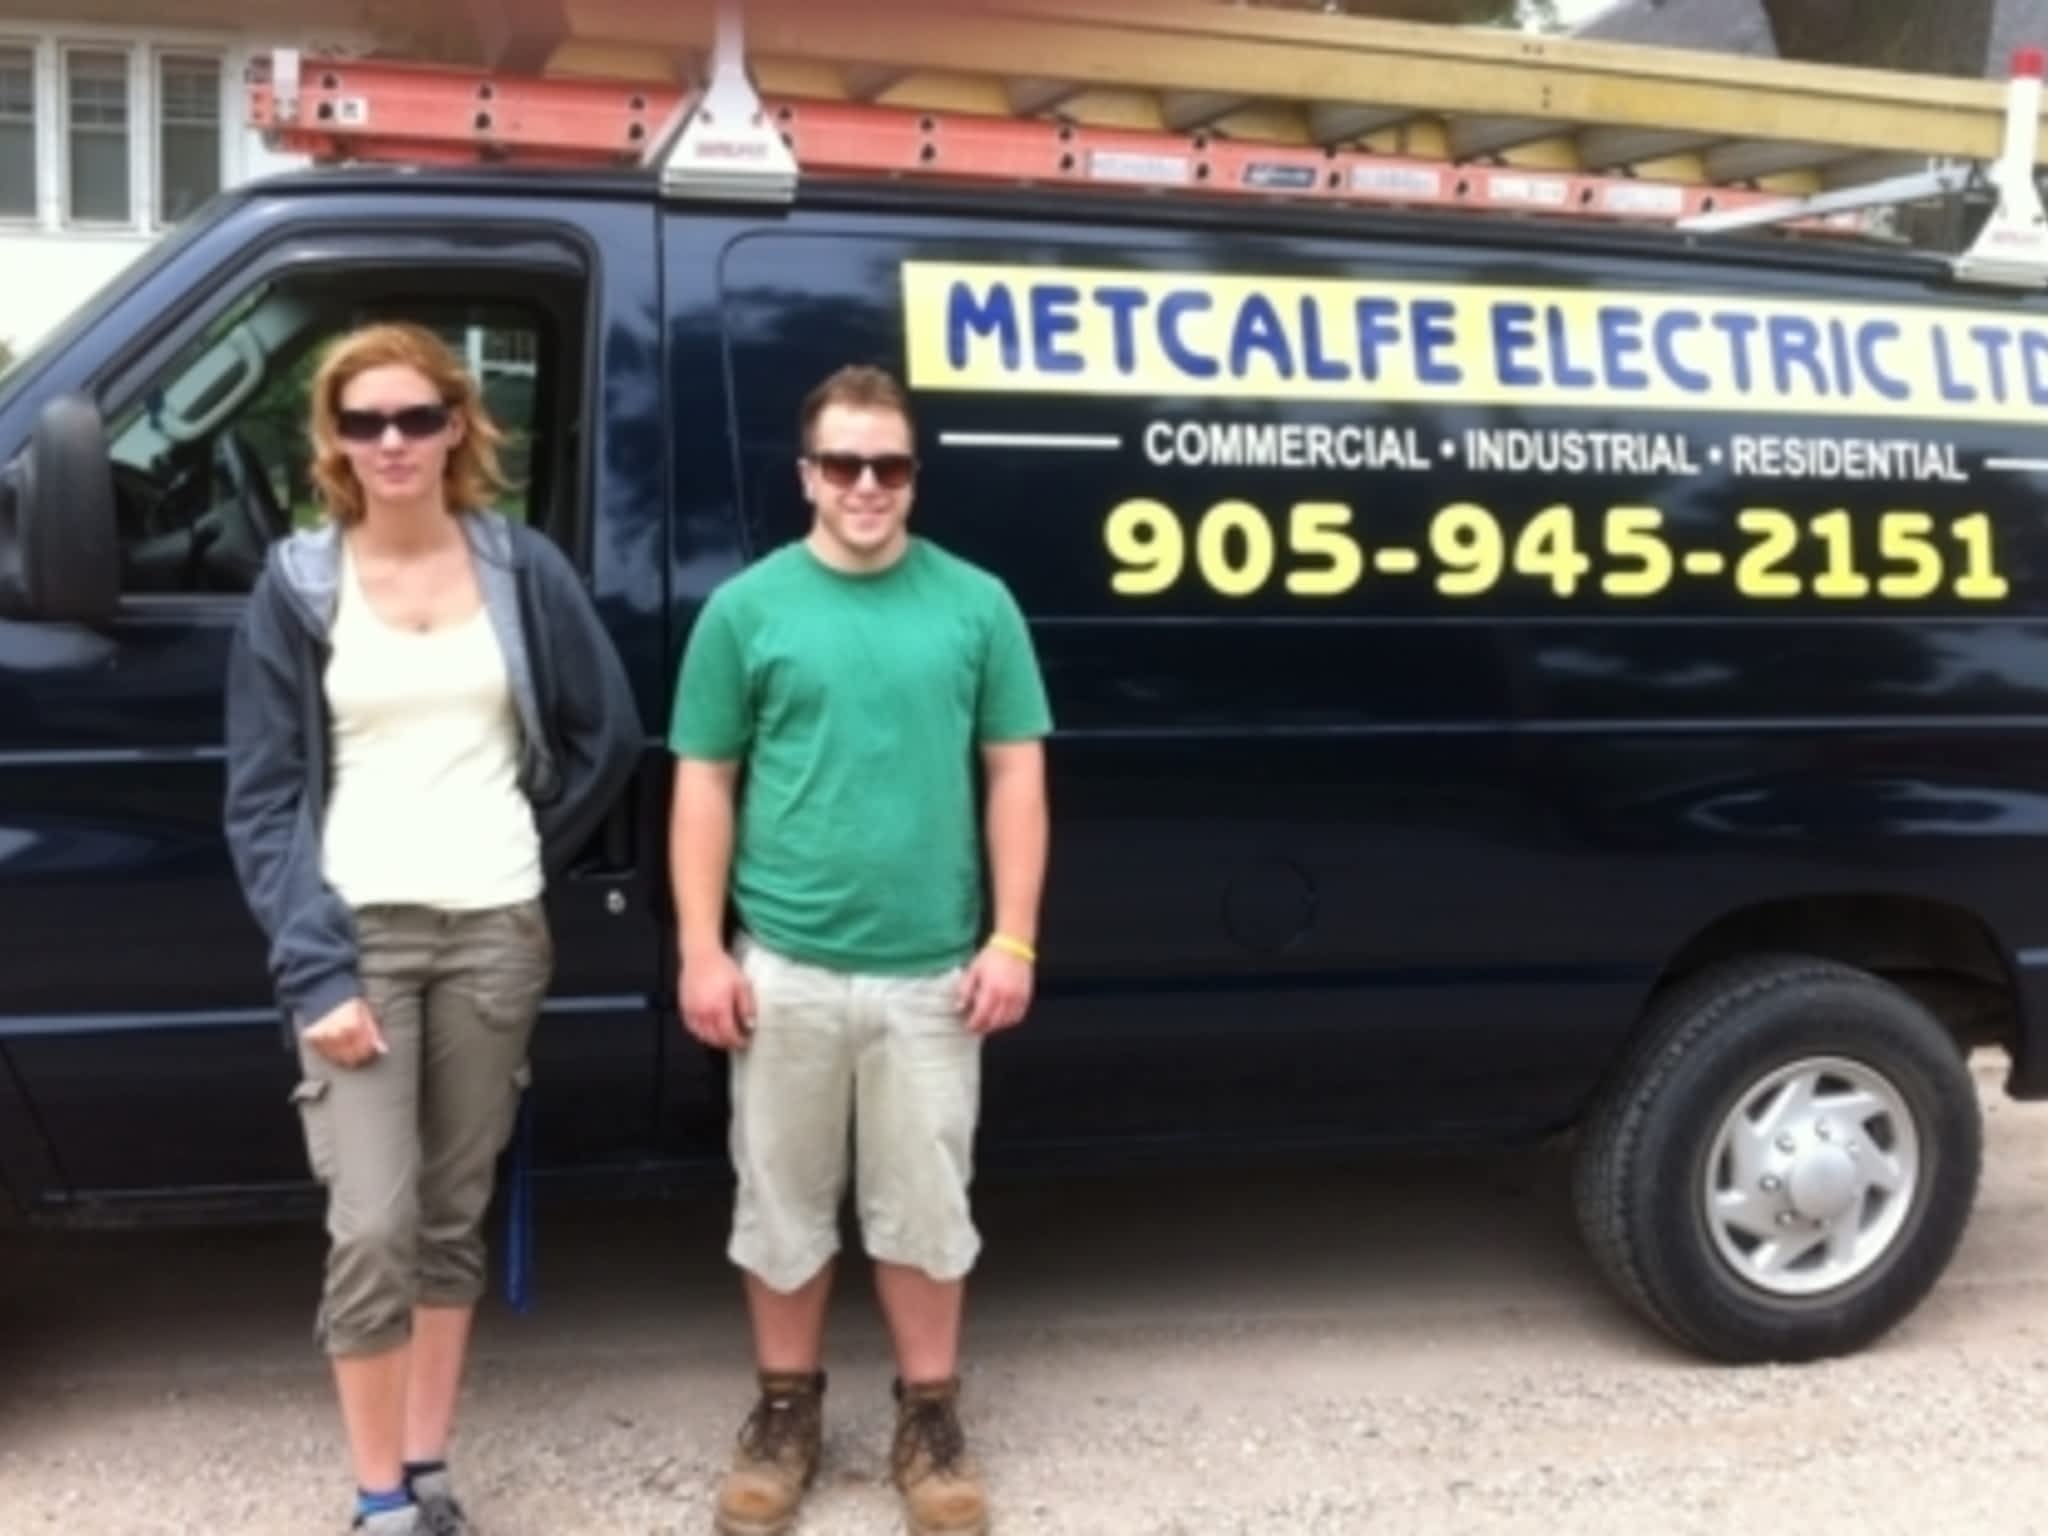 photo Metcalfe Electric Ltd